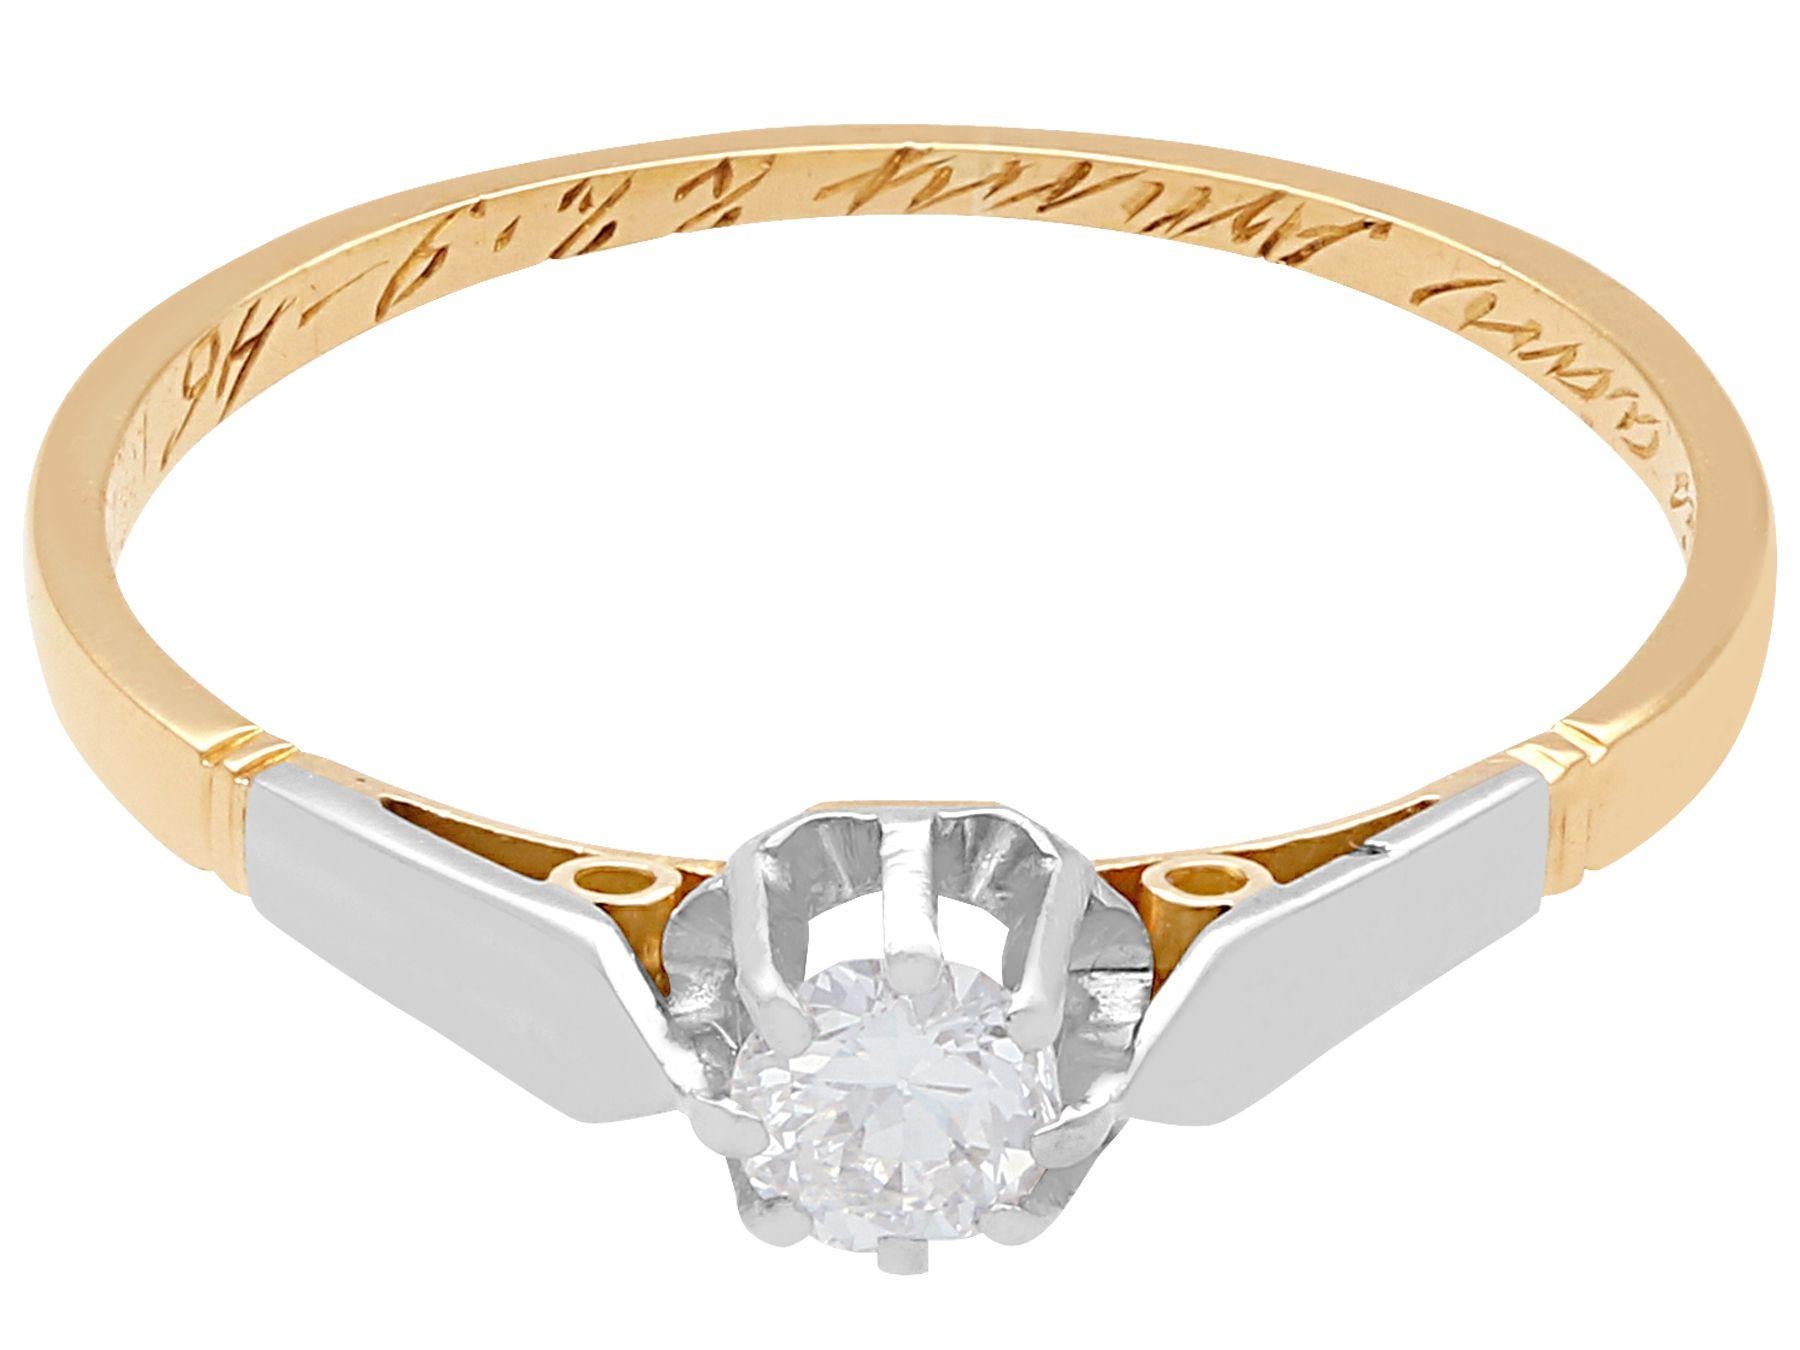 1940s diamond engagement ring